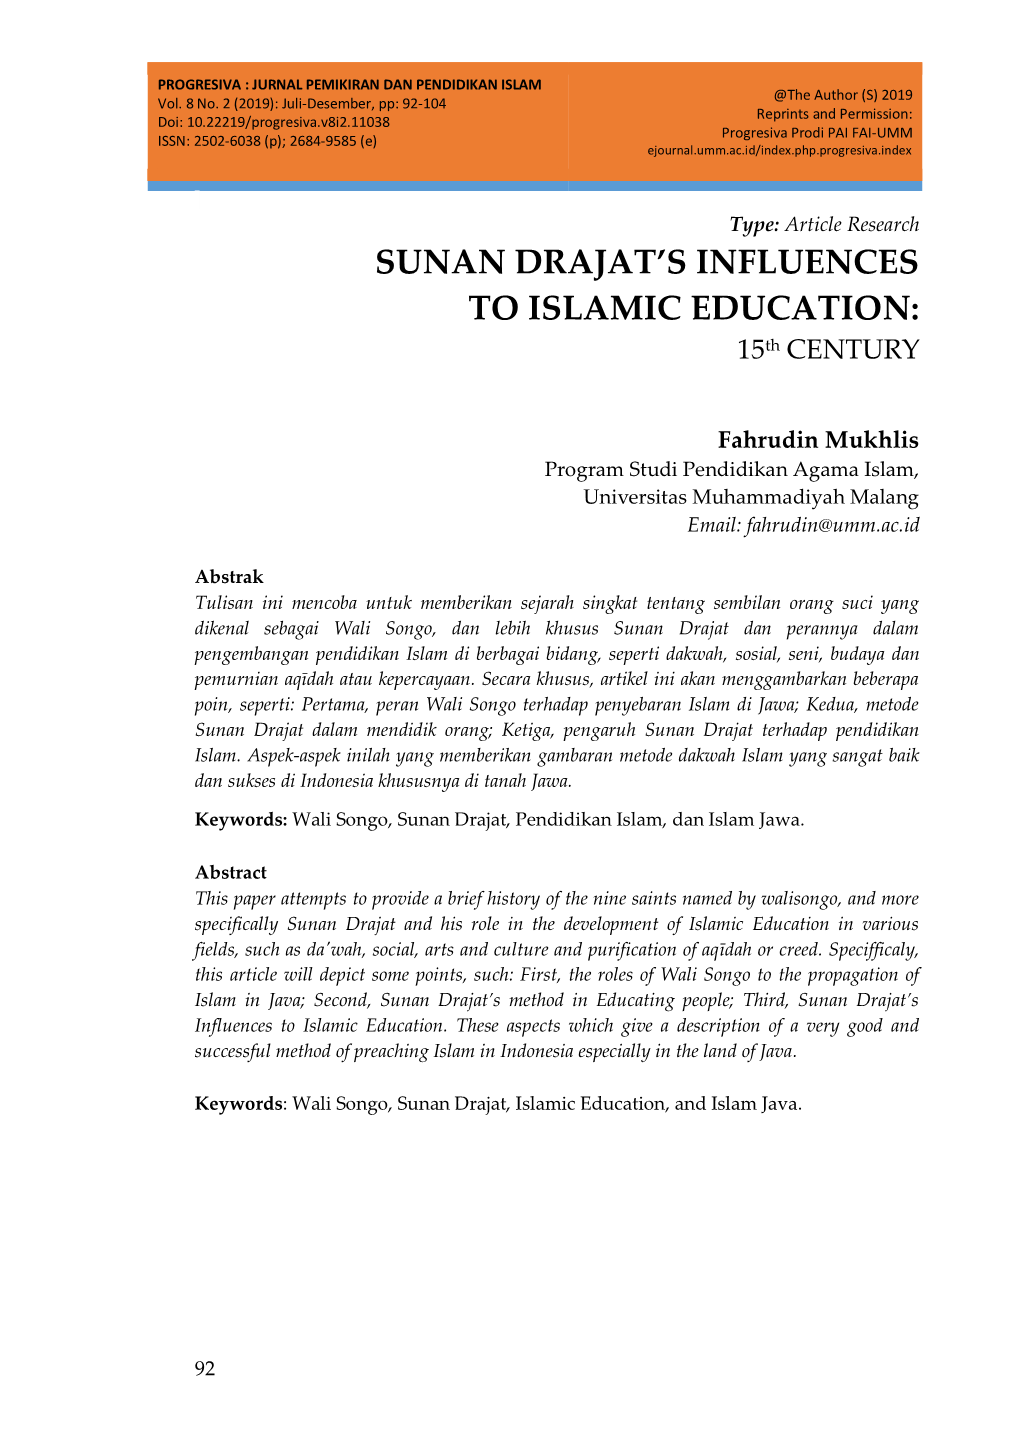 Sunan Drajat's Influences to Islamic Education